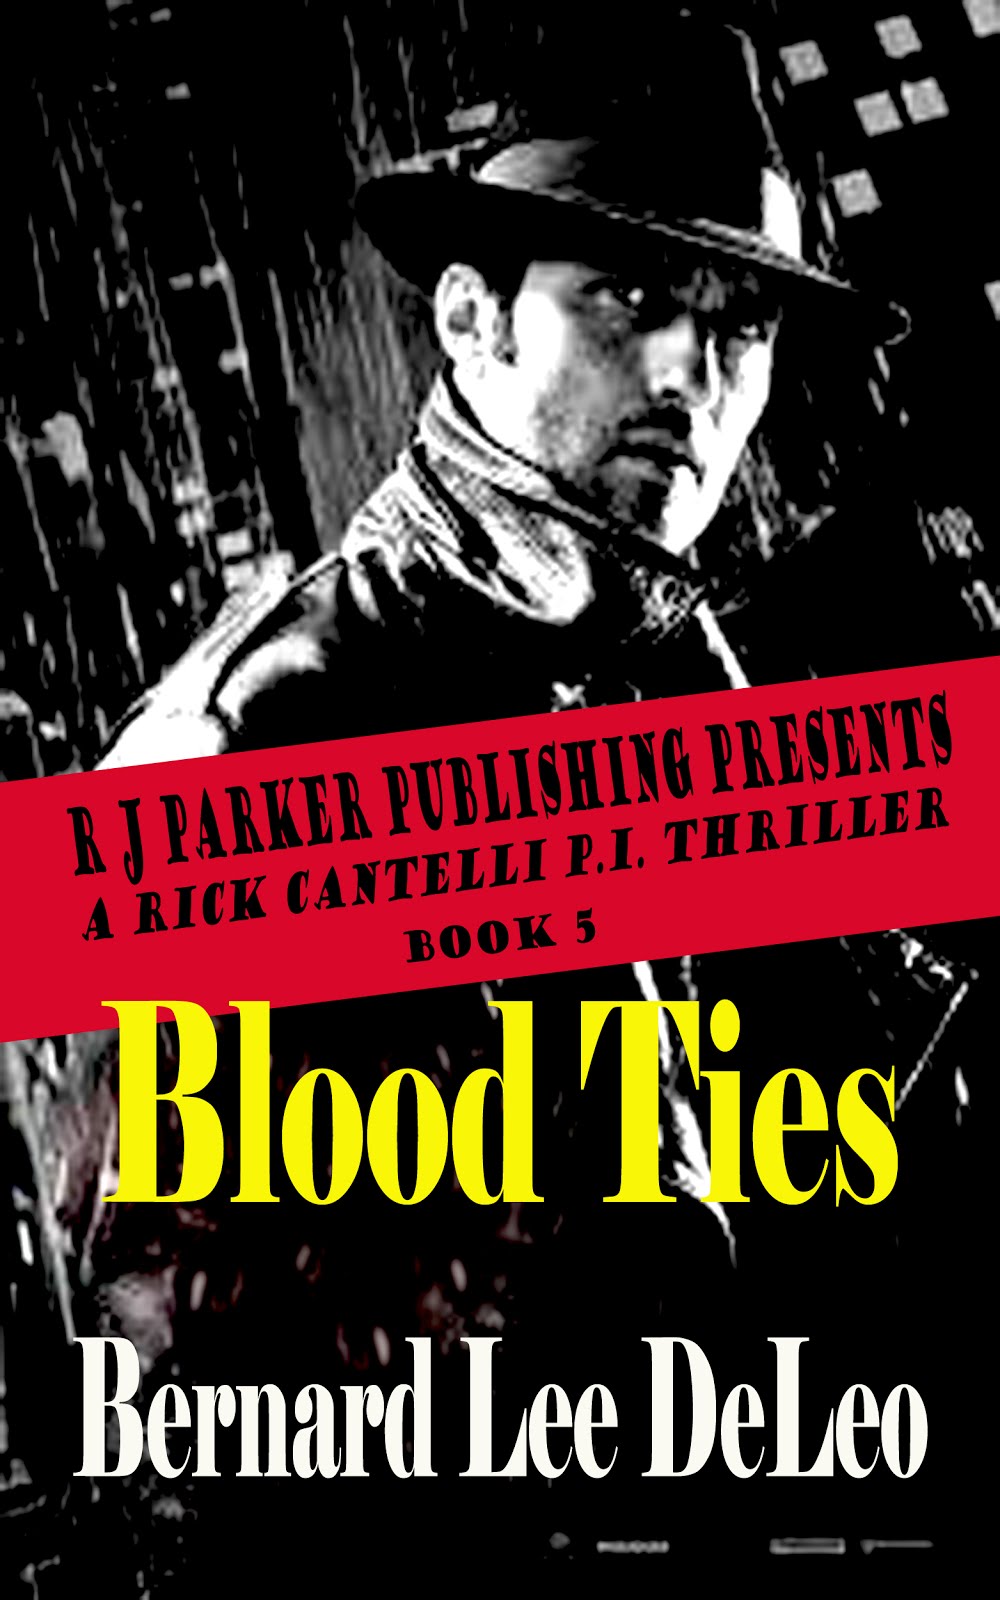 Rick Cantelli, P.I. Book 5: Blood Ties